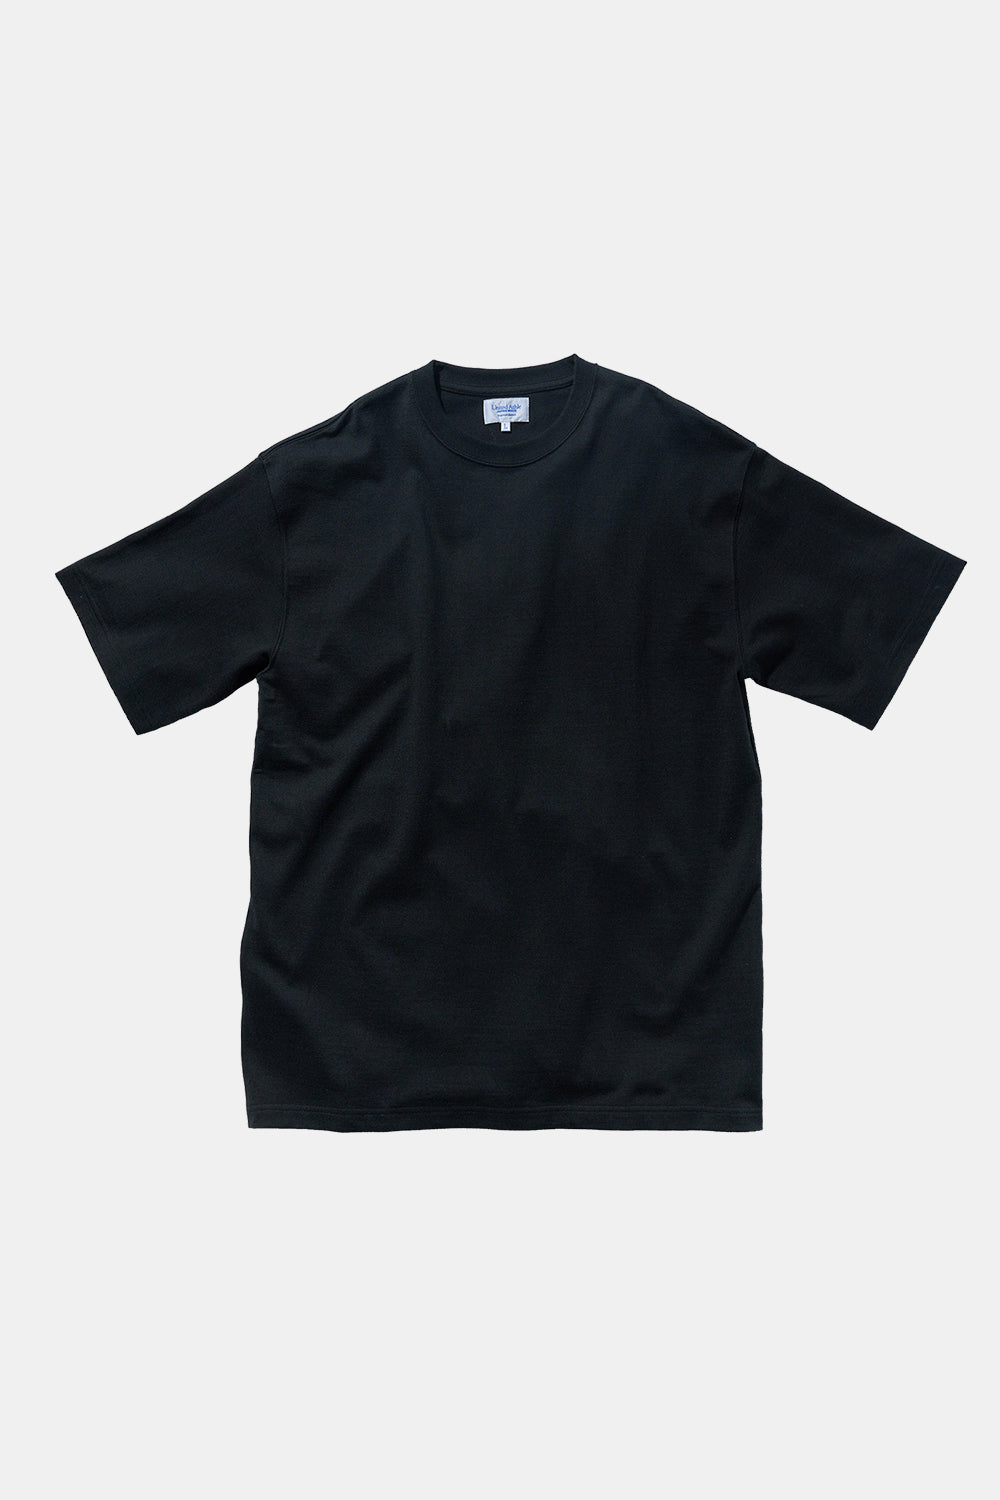 United Athle Japan Made Standard Fit Short Sleeve T-shirt (Black)